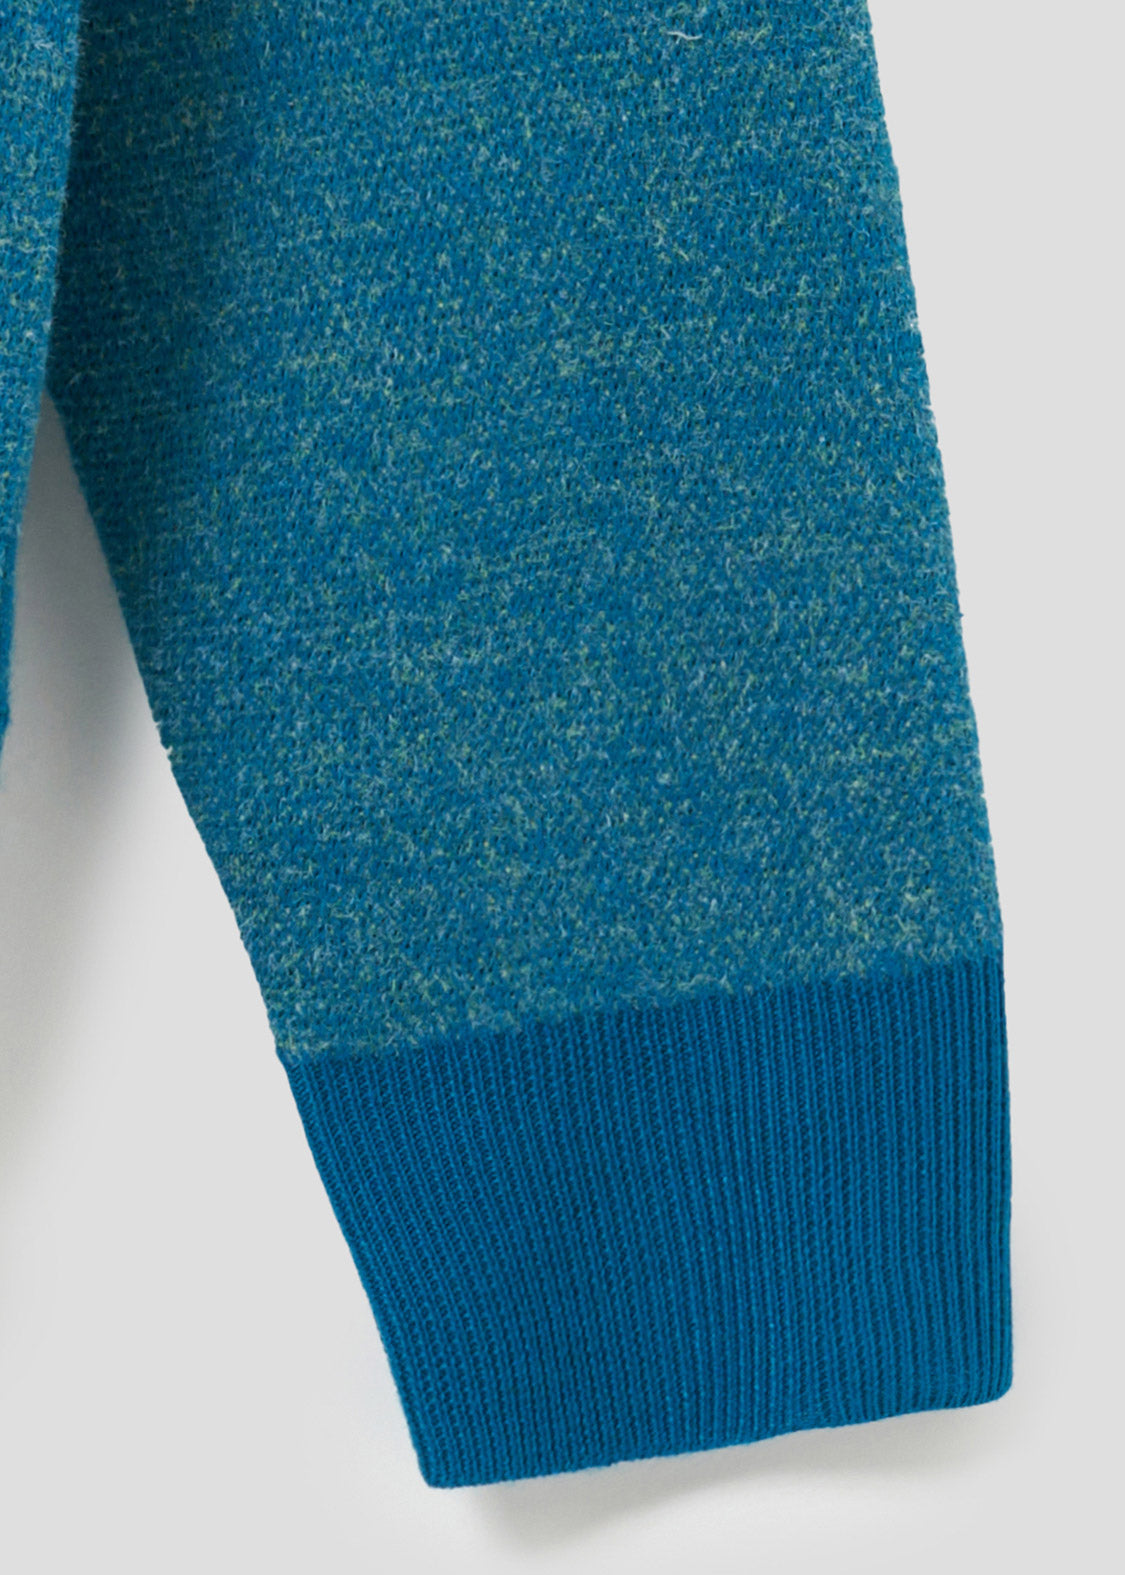 Choju Giga Jacquard Long Sleeve Knit (Choju Giga_002_Yumiya)